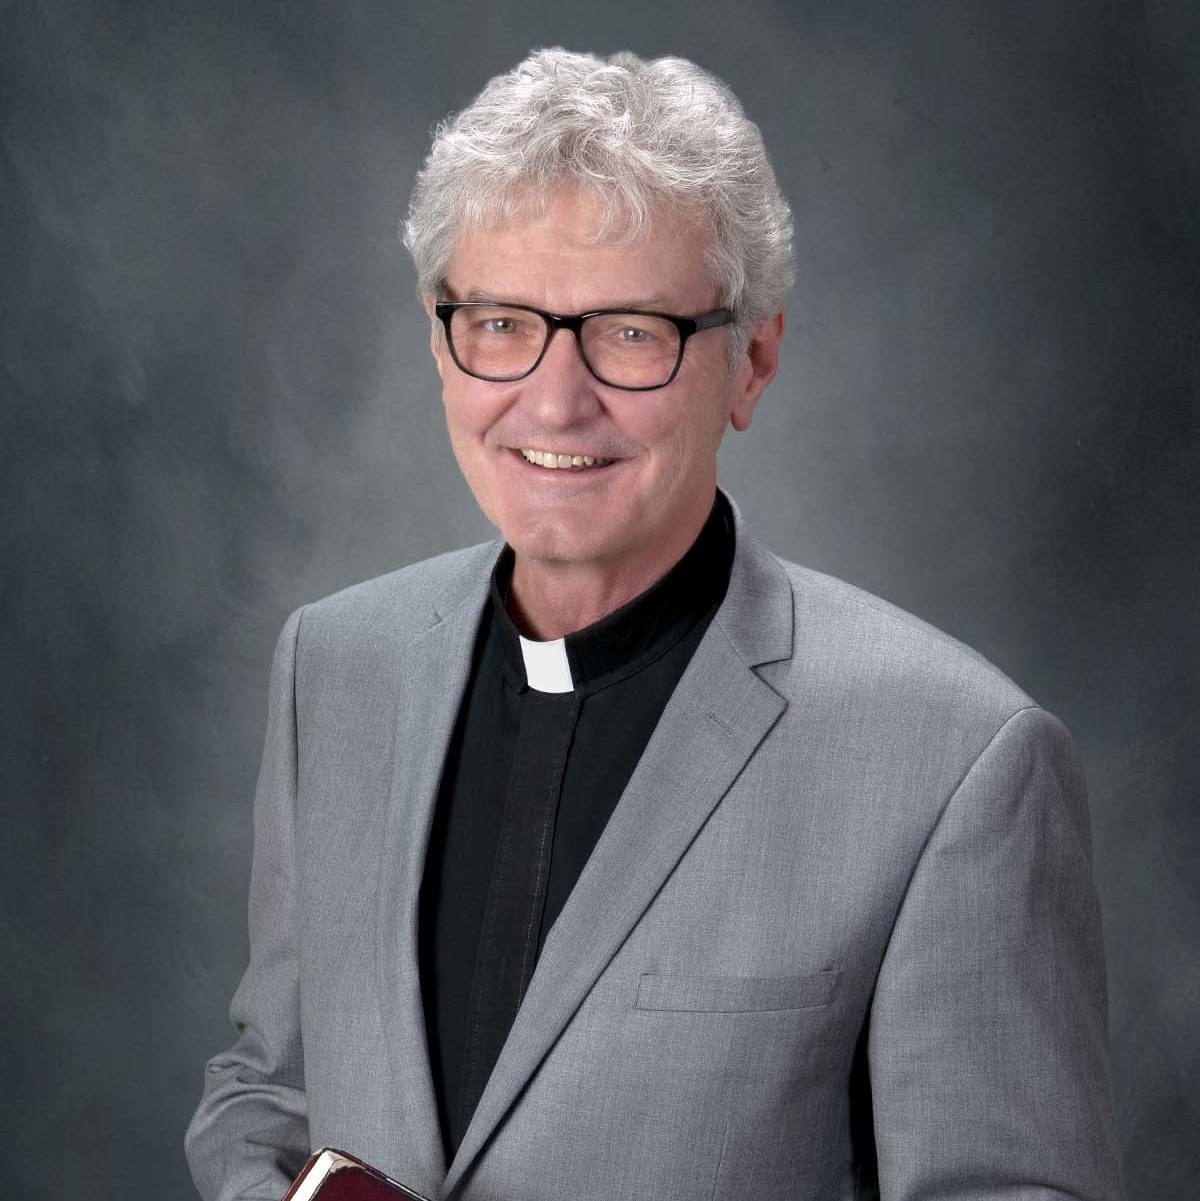 The Rev. Dr. Eric M. Riesen